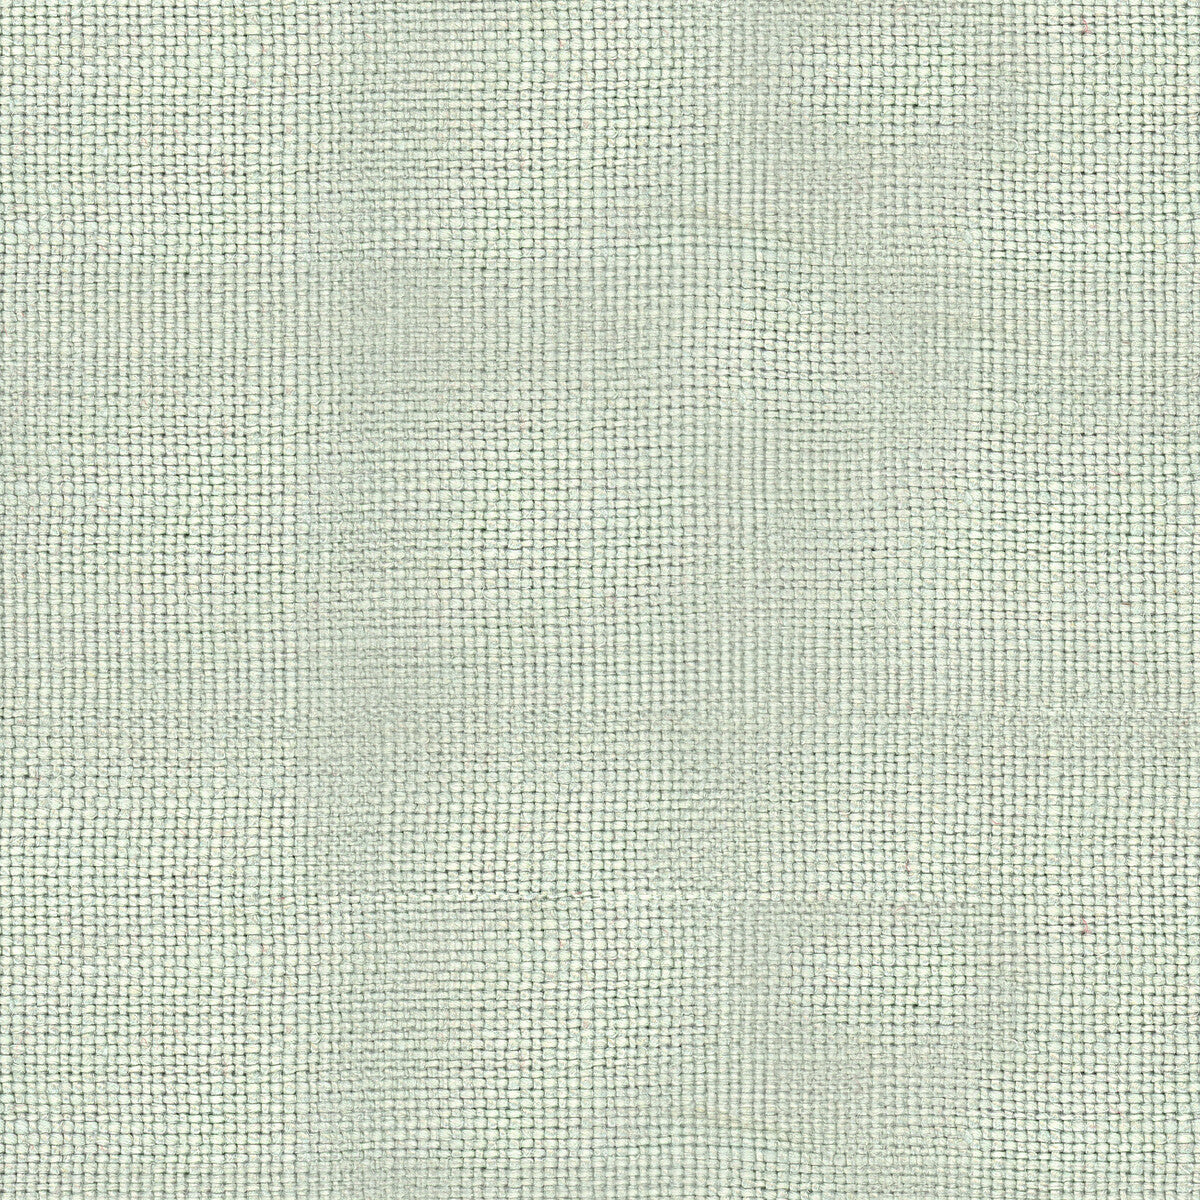 Kravet Design fabric in 32330-13 color - pattern 32330.13.0 - by Kravet Design in the Gis collection